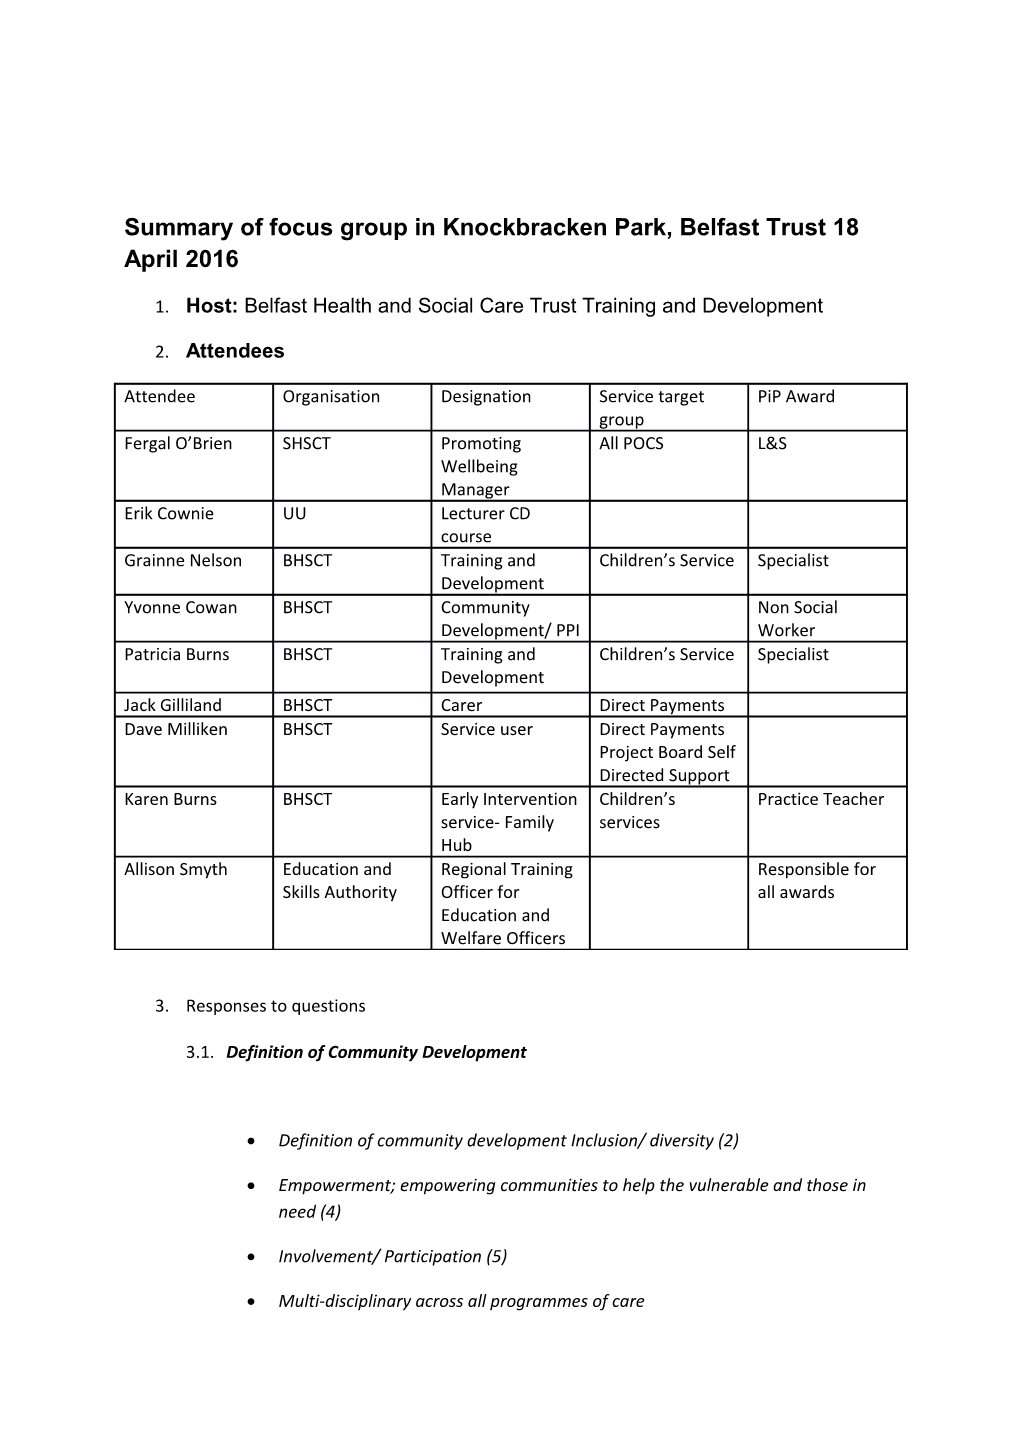 Summary of Focus Group in Knockbracken Park, Belfast Trust 18 April 2016